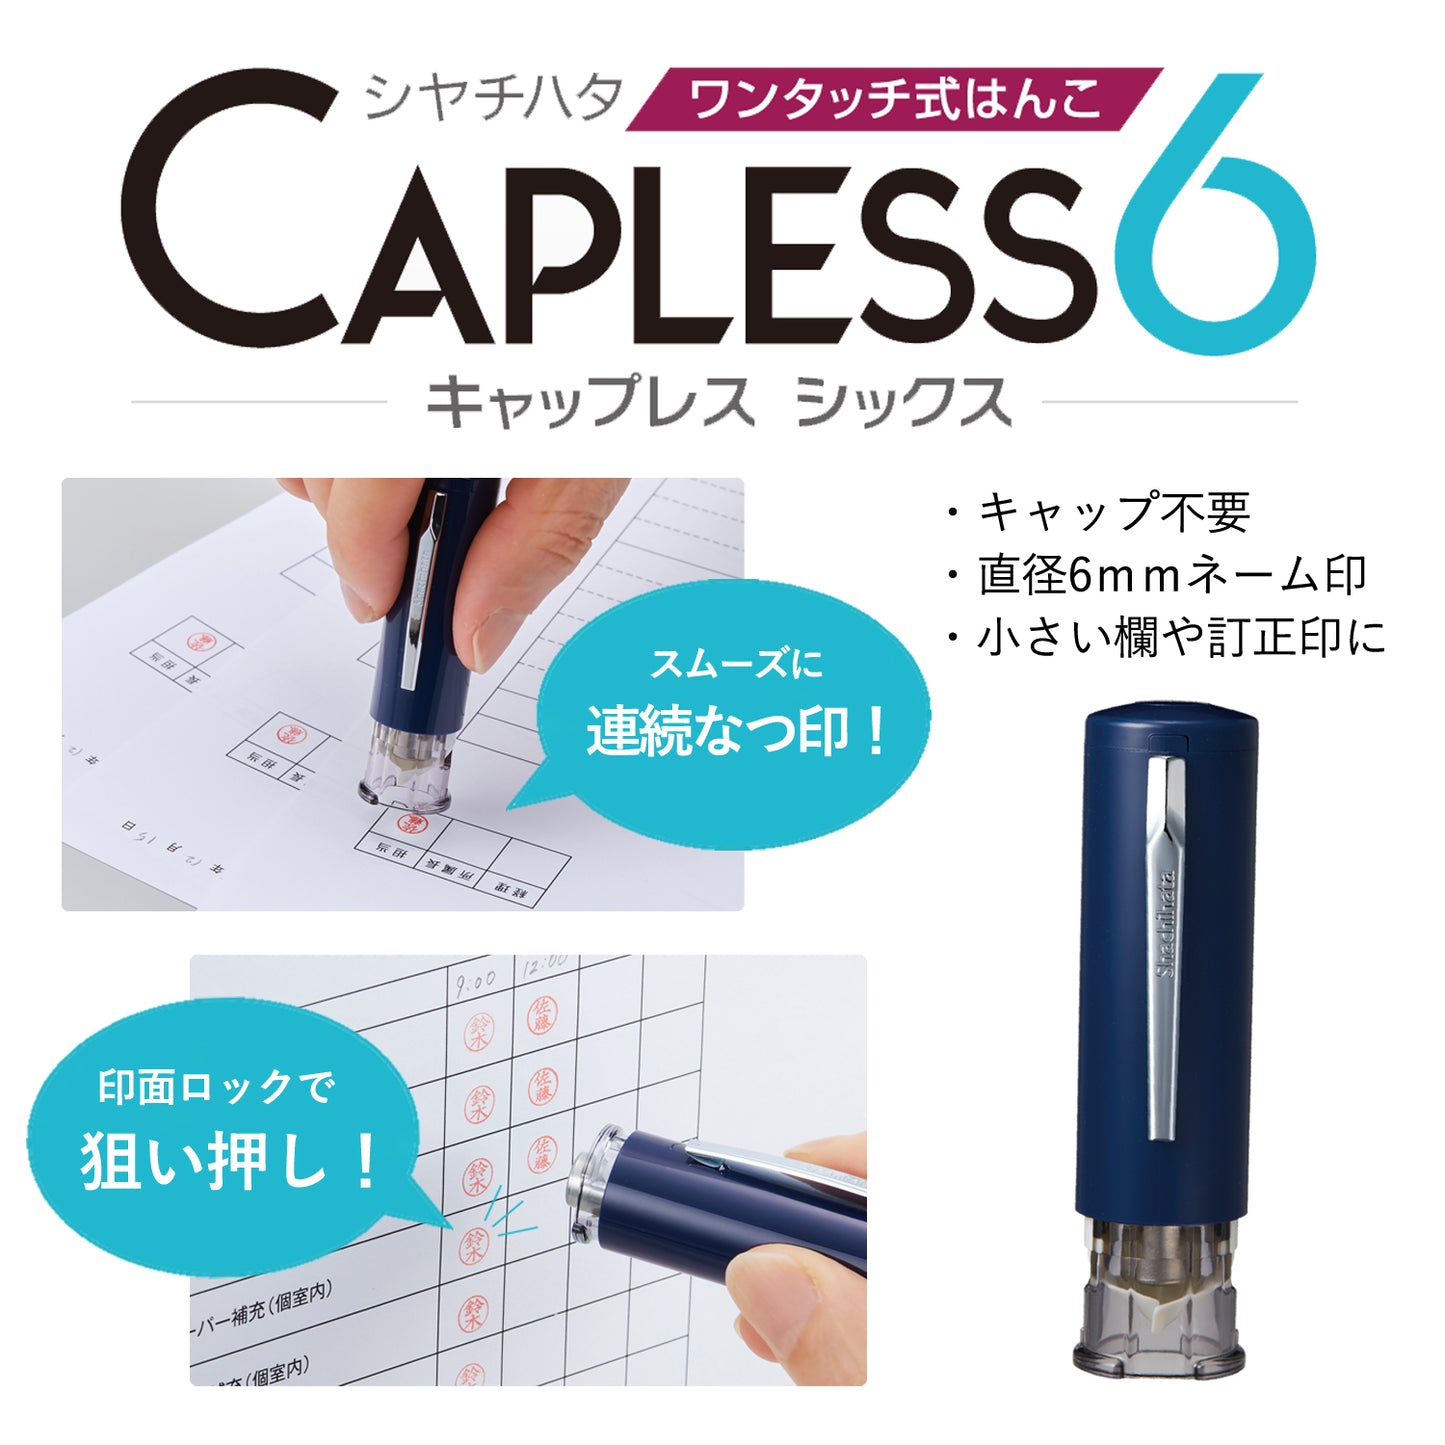 Capless 6 (custom made)